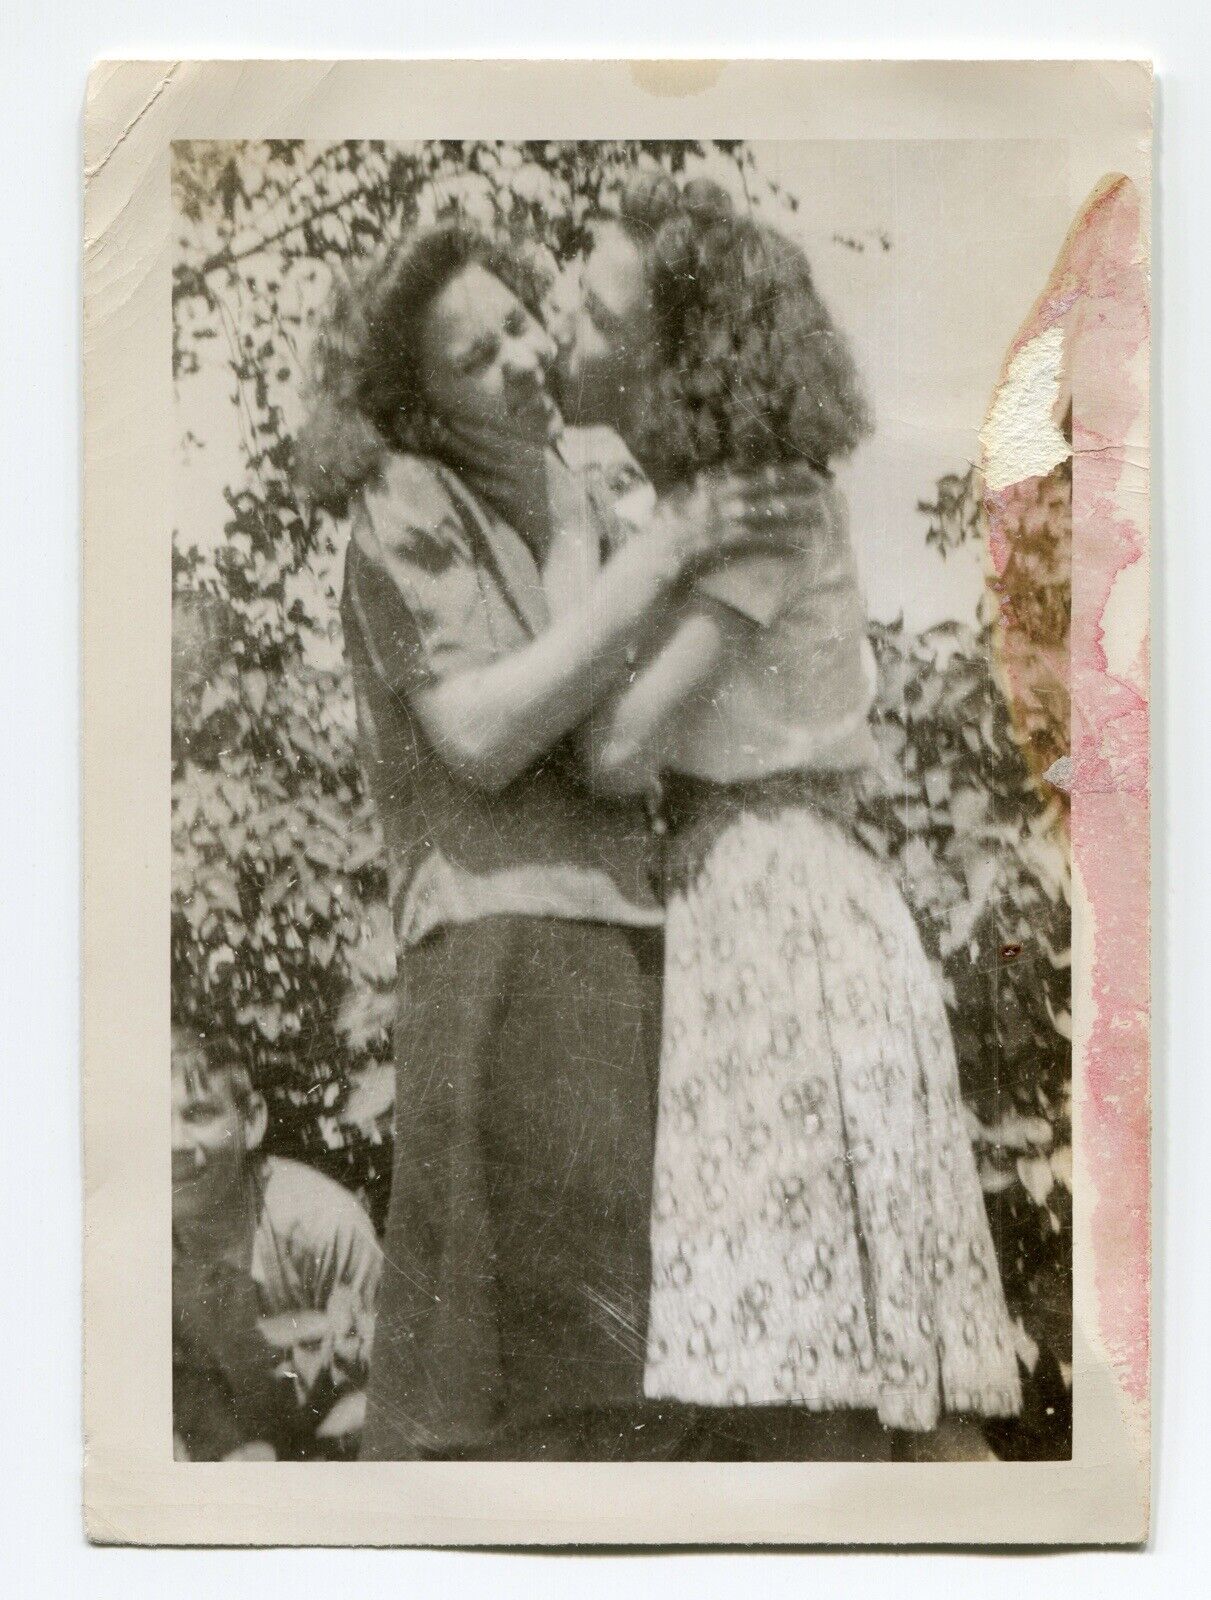 Vintage 1940s Snapshot, Women Kissing, Lesbian Photo, Gay Interest